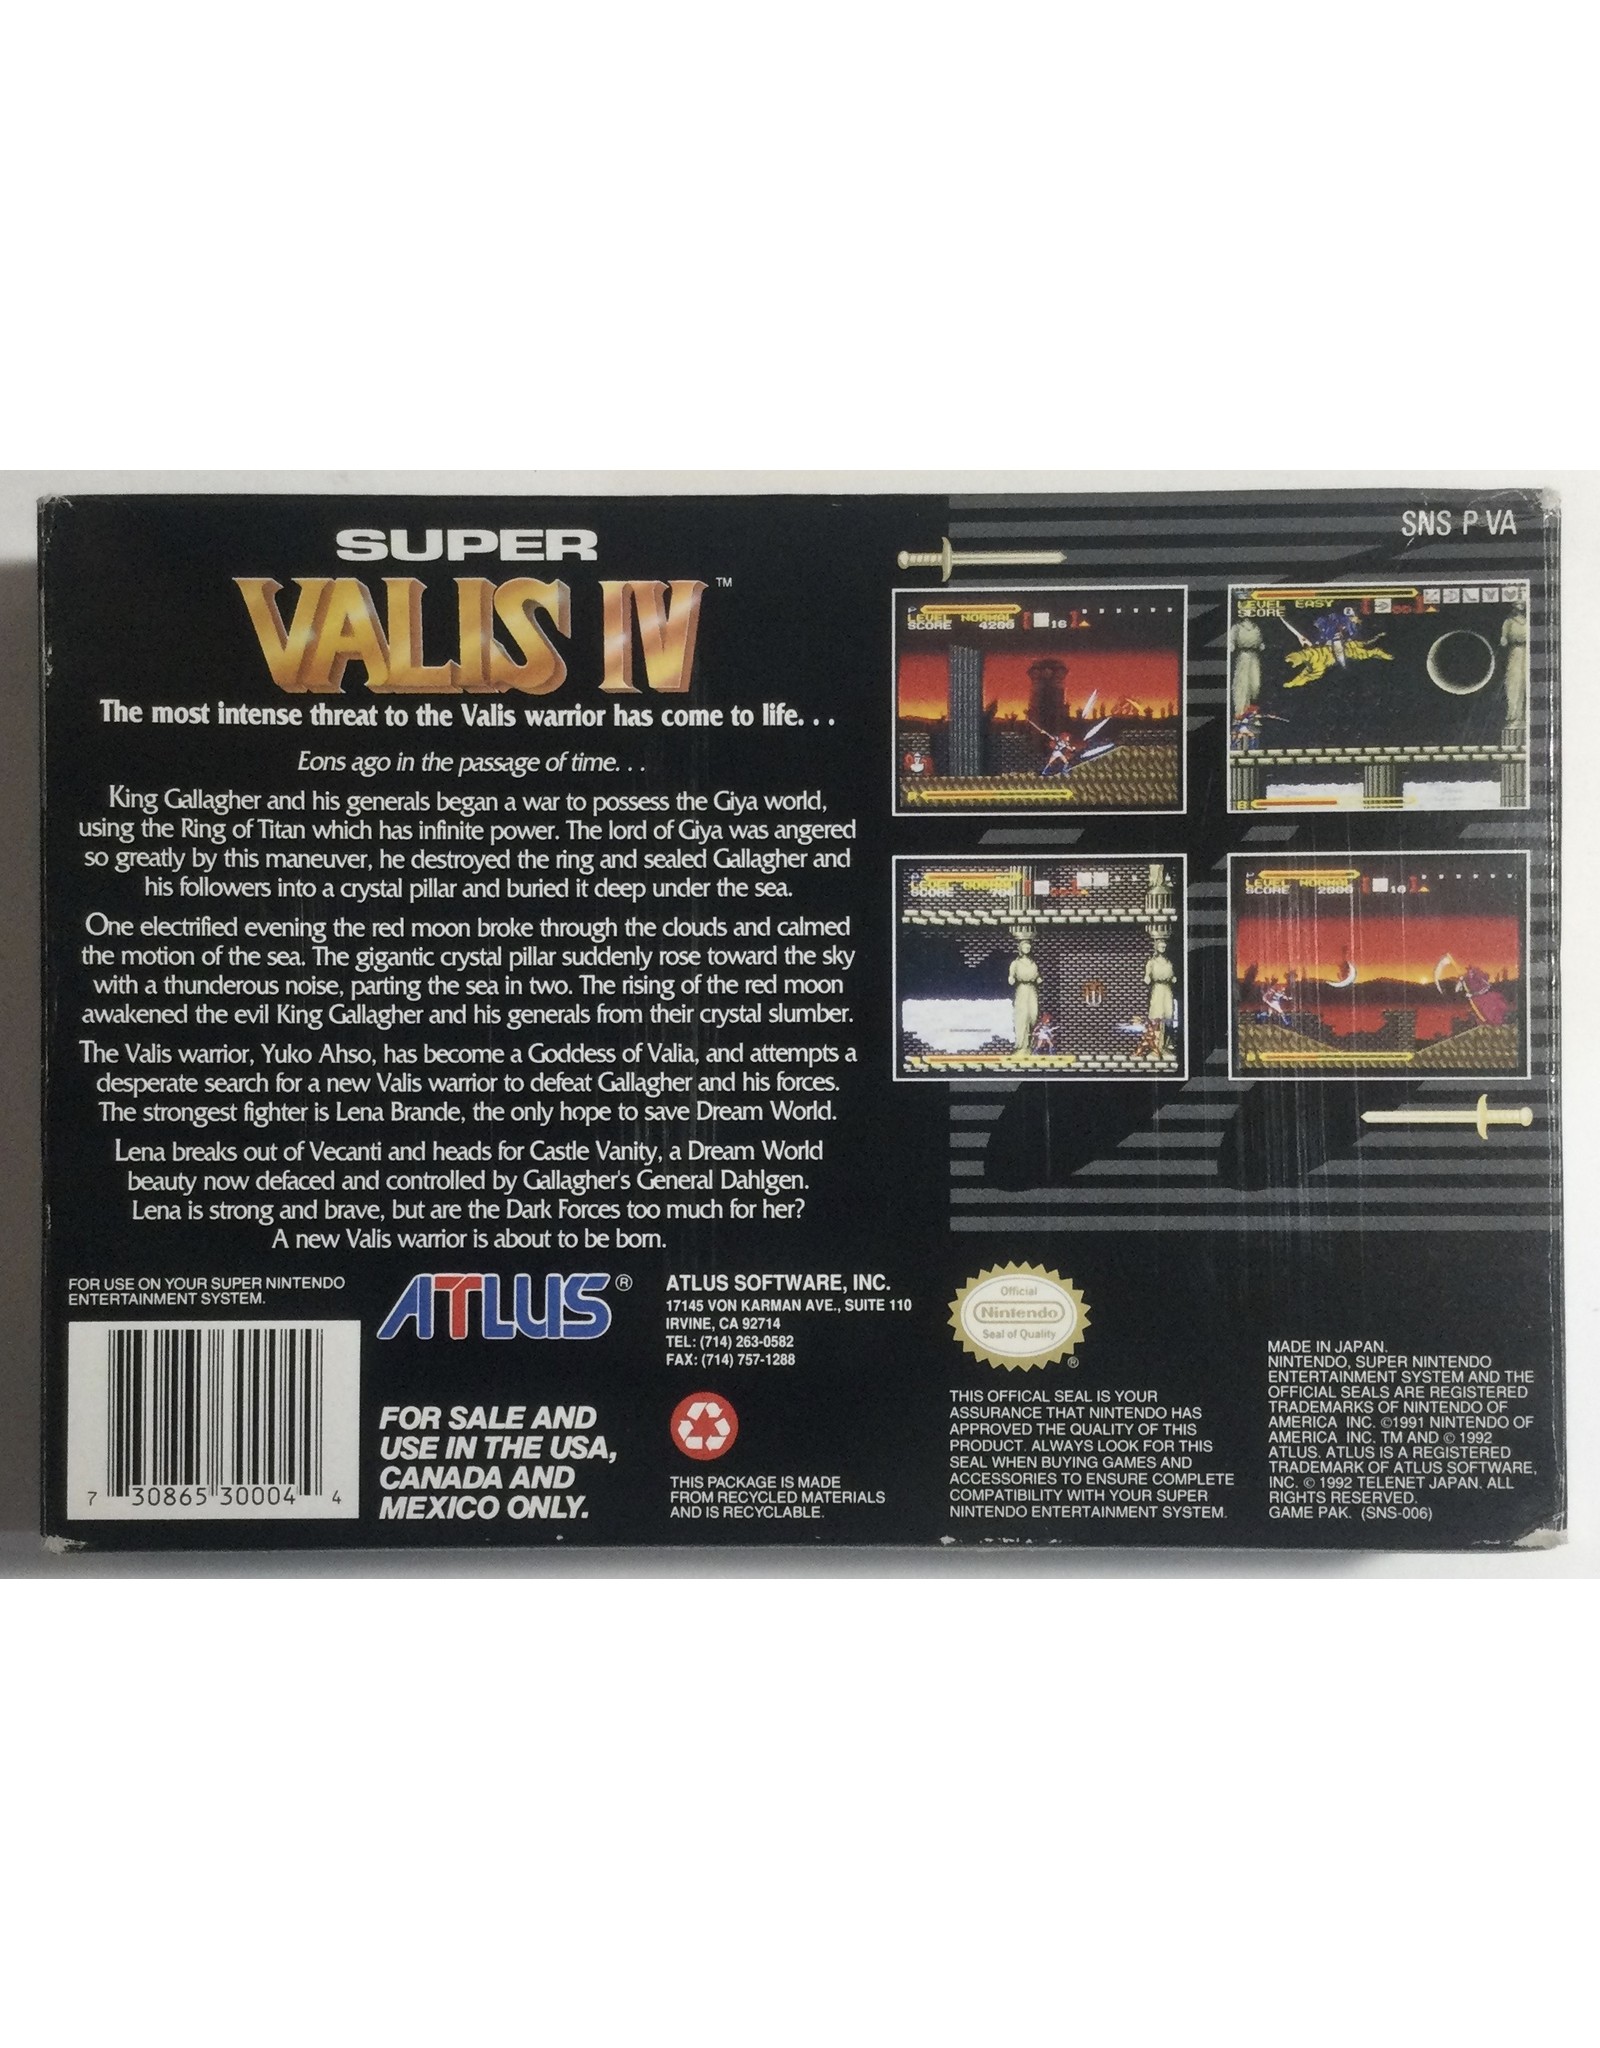 ATLUS Super Valis IV for Super Nintendo Entertainment System (SNES)